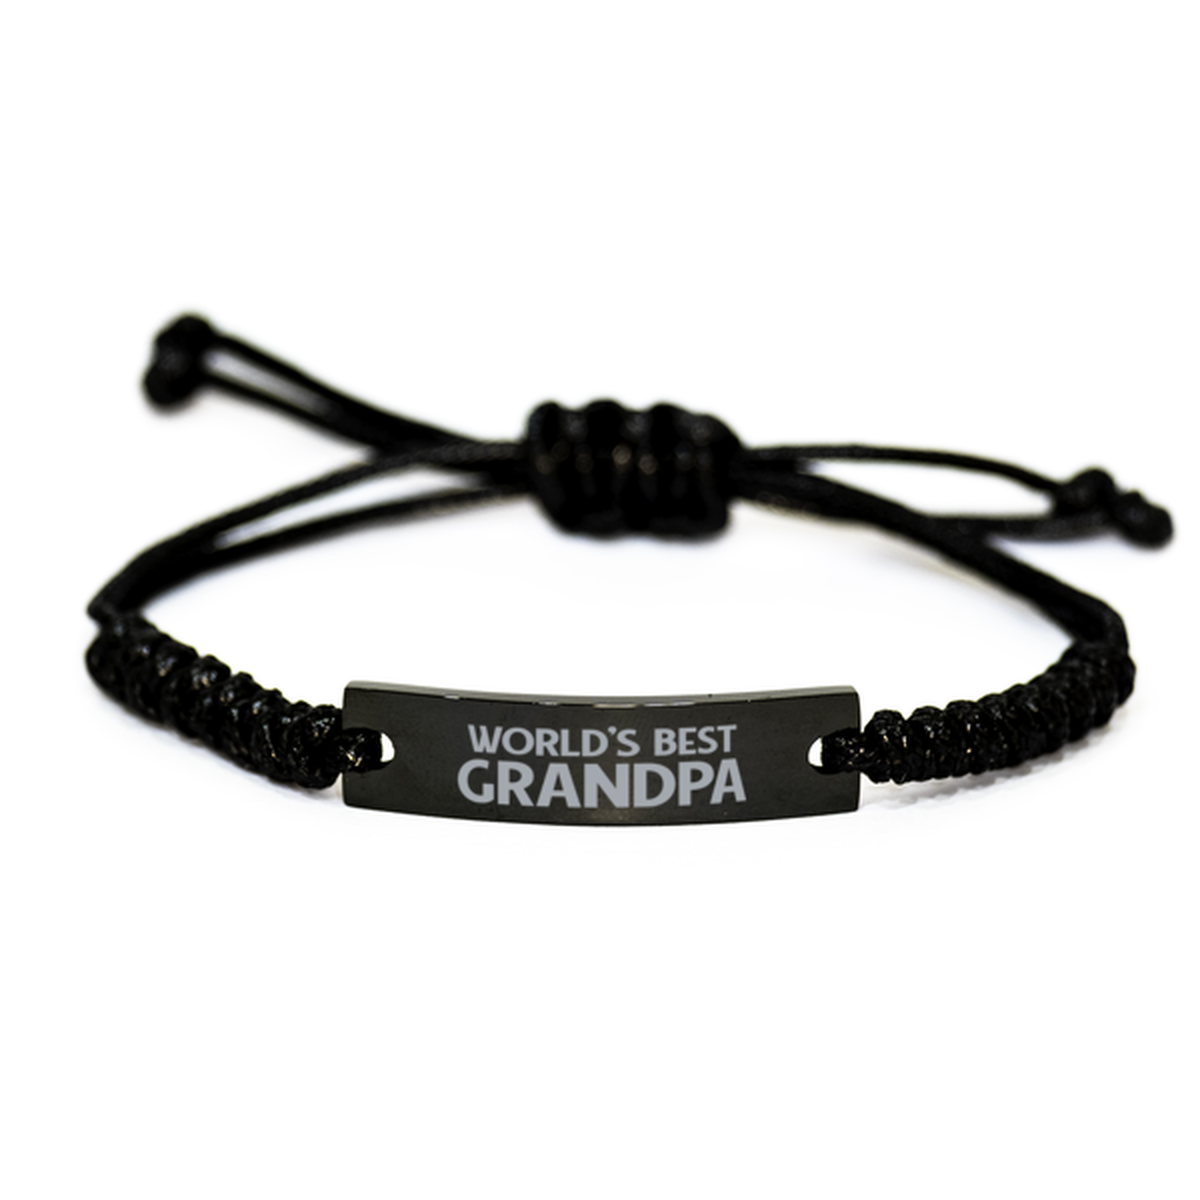 World's Best Grandpa Gifts, Funny Engraved Rope Bracelet For Grandpa, Birthday Family Gifts For Men